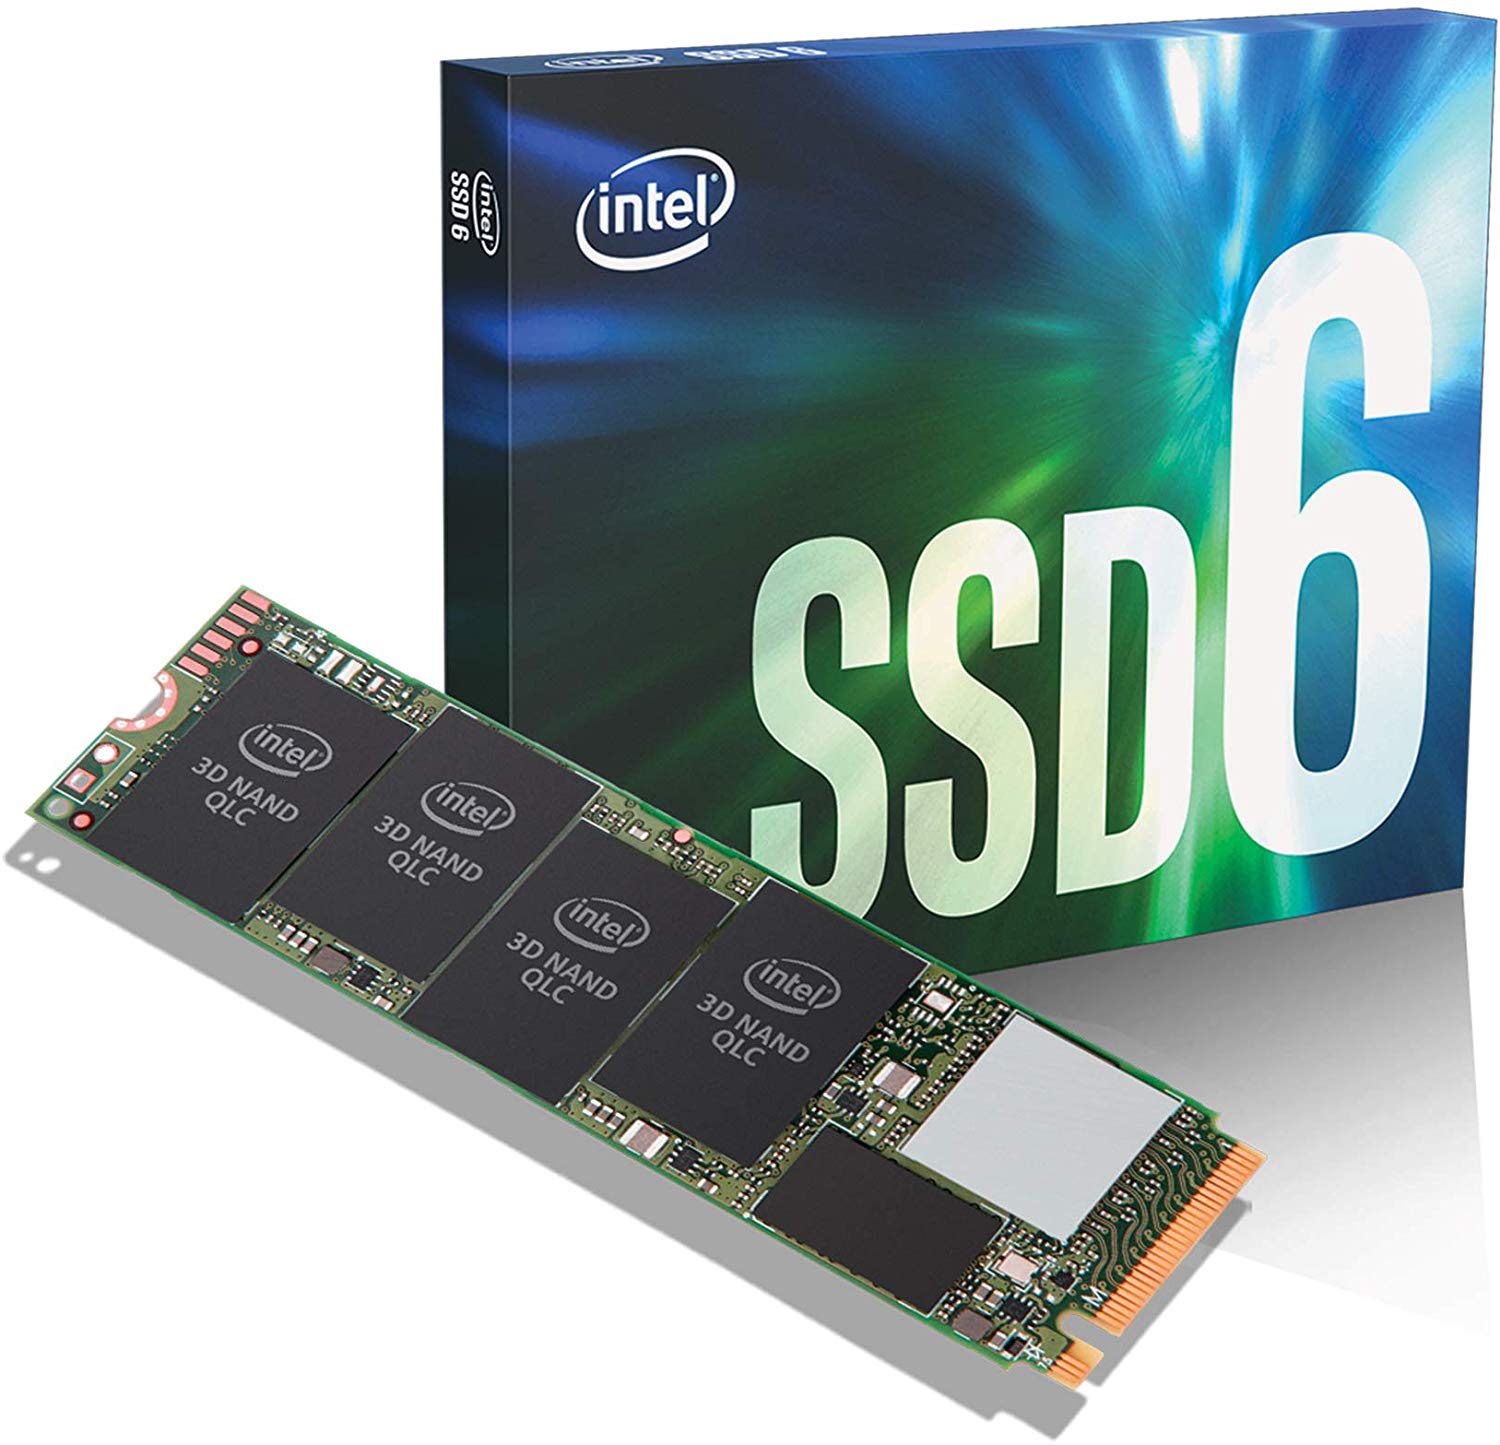 Intel Solid State Drive (SSD), 660P Series, 1 TB 735858381512 | eBay